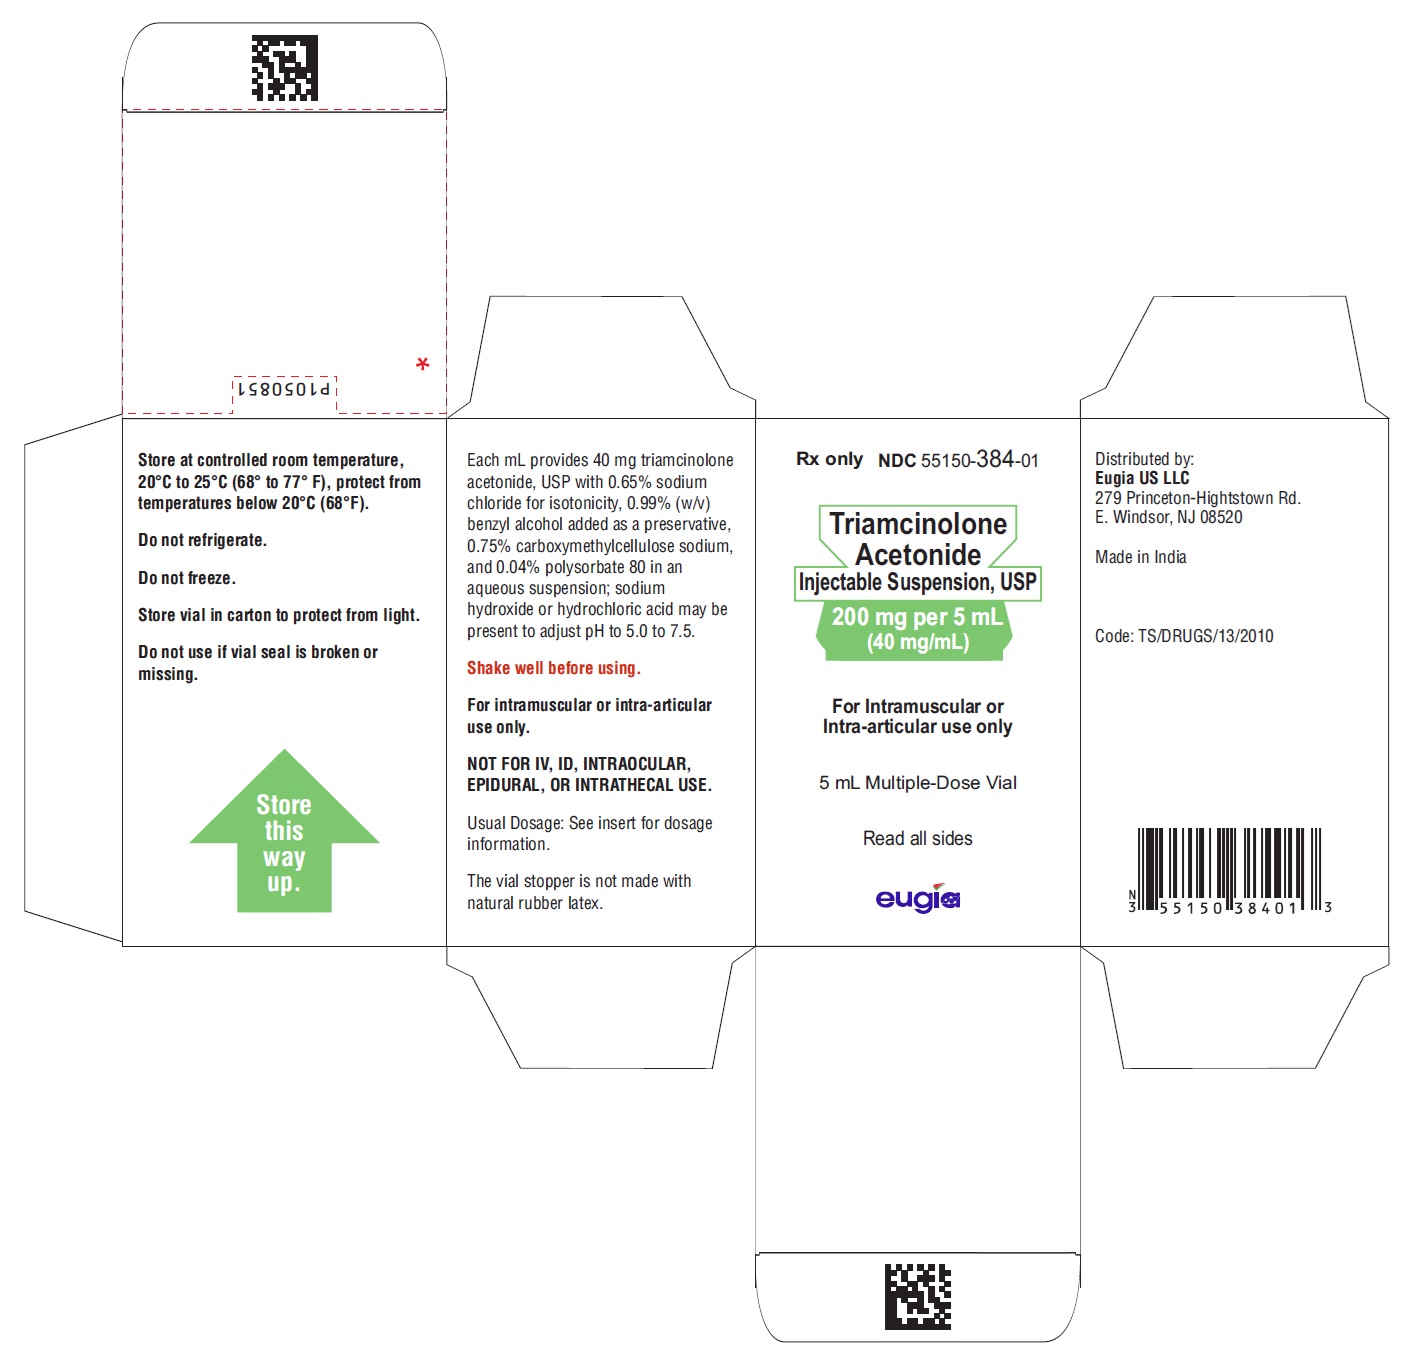 PACKAGE LABEL-PRINCIPAL DISPLAY PANEL-200 mg per 5 mL (40 mg/mL) - Container-Carton (1 Vial)